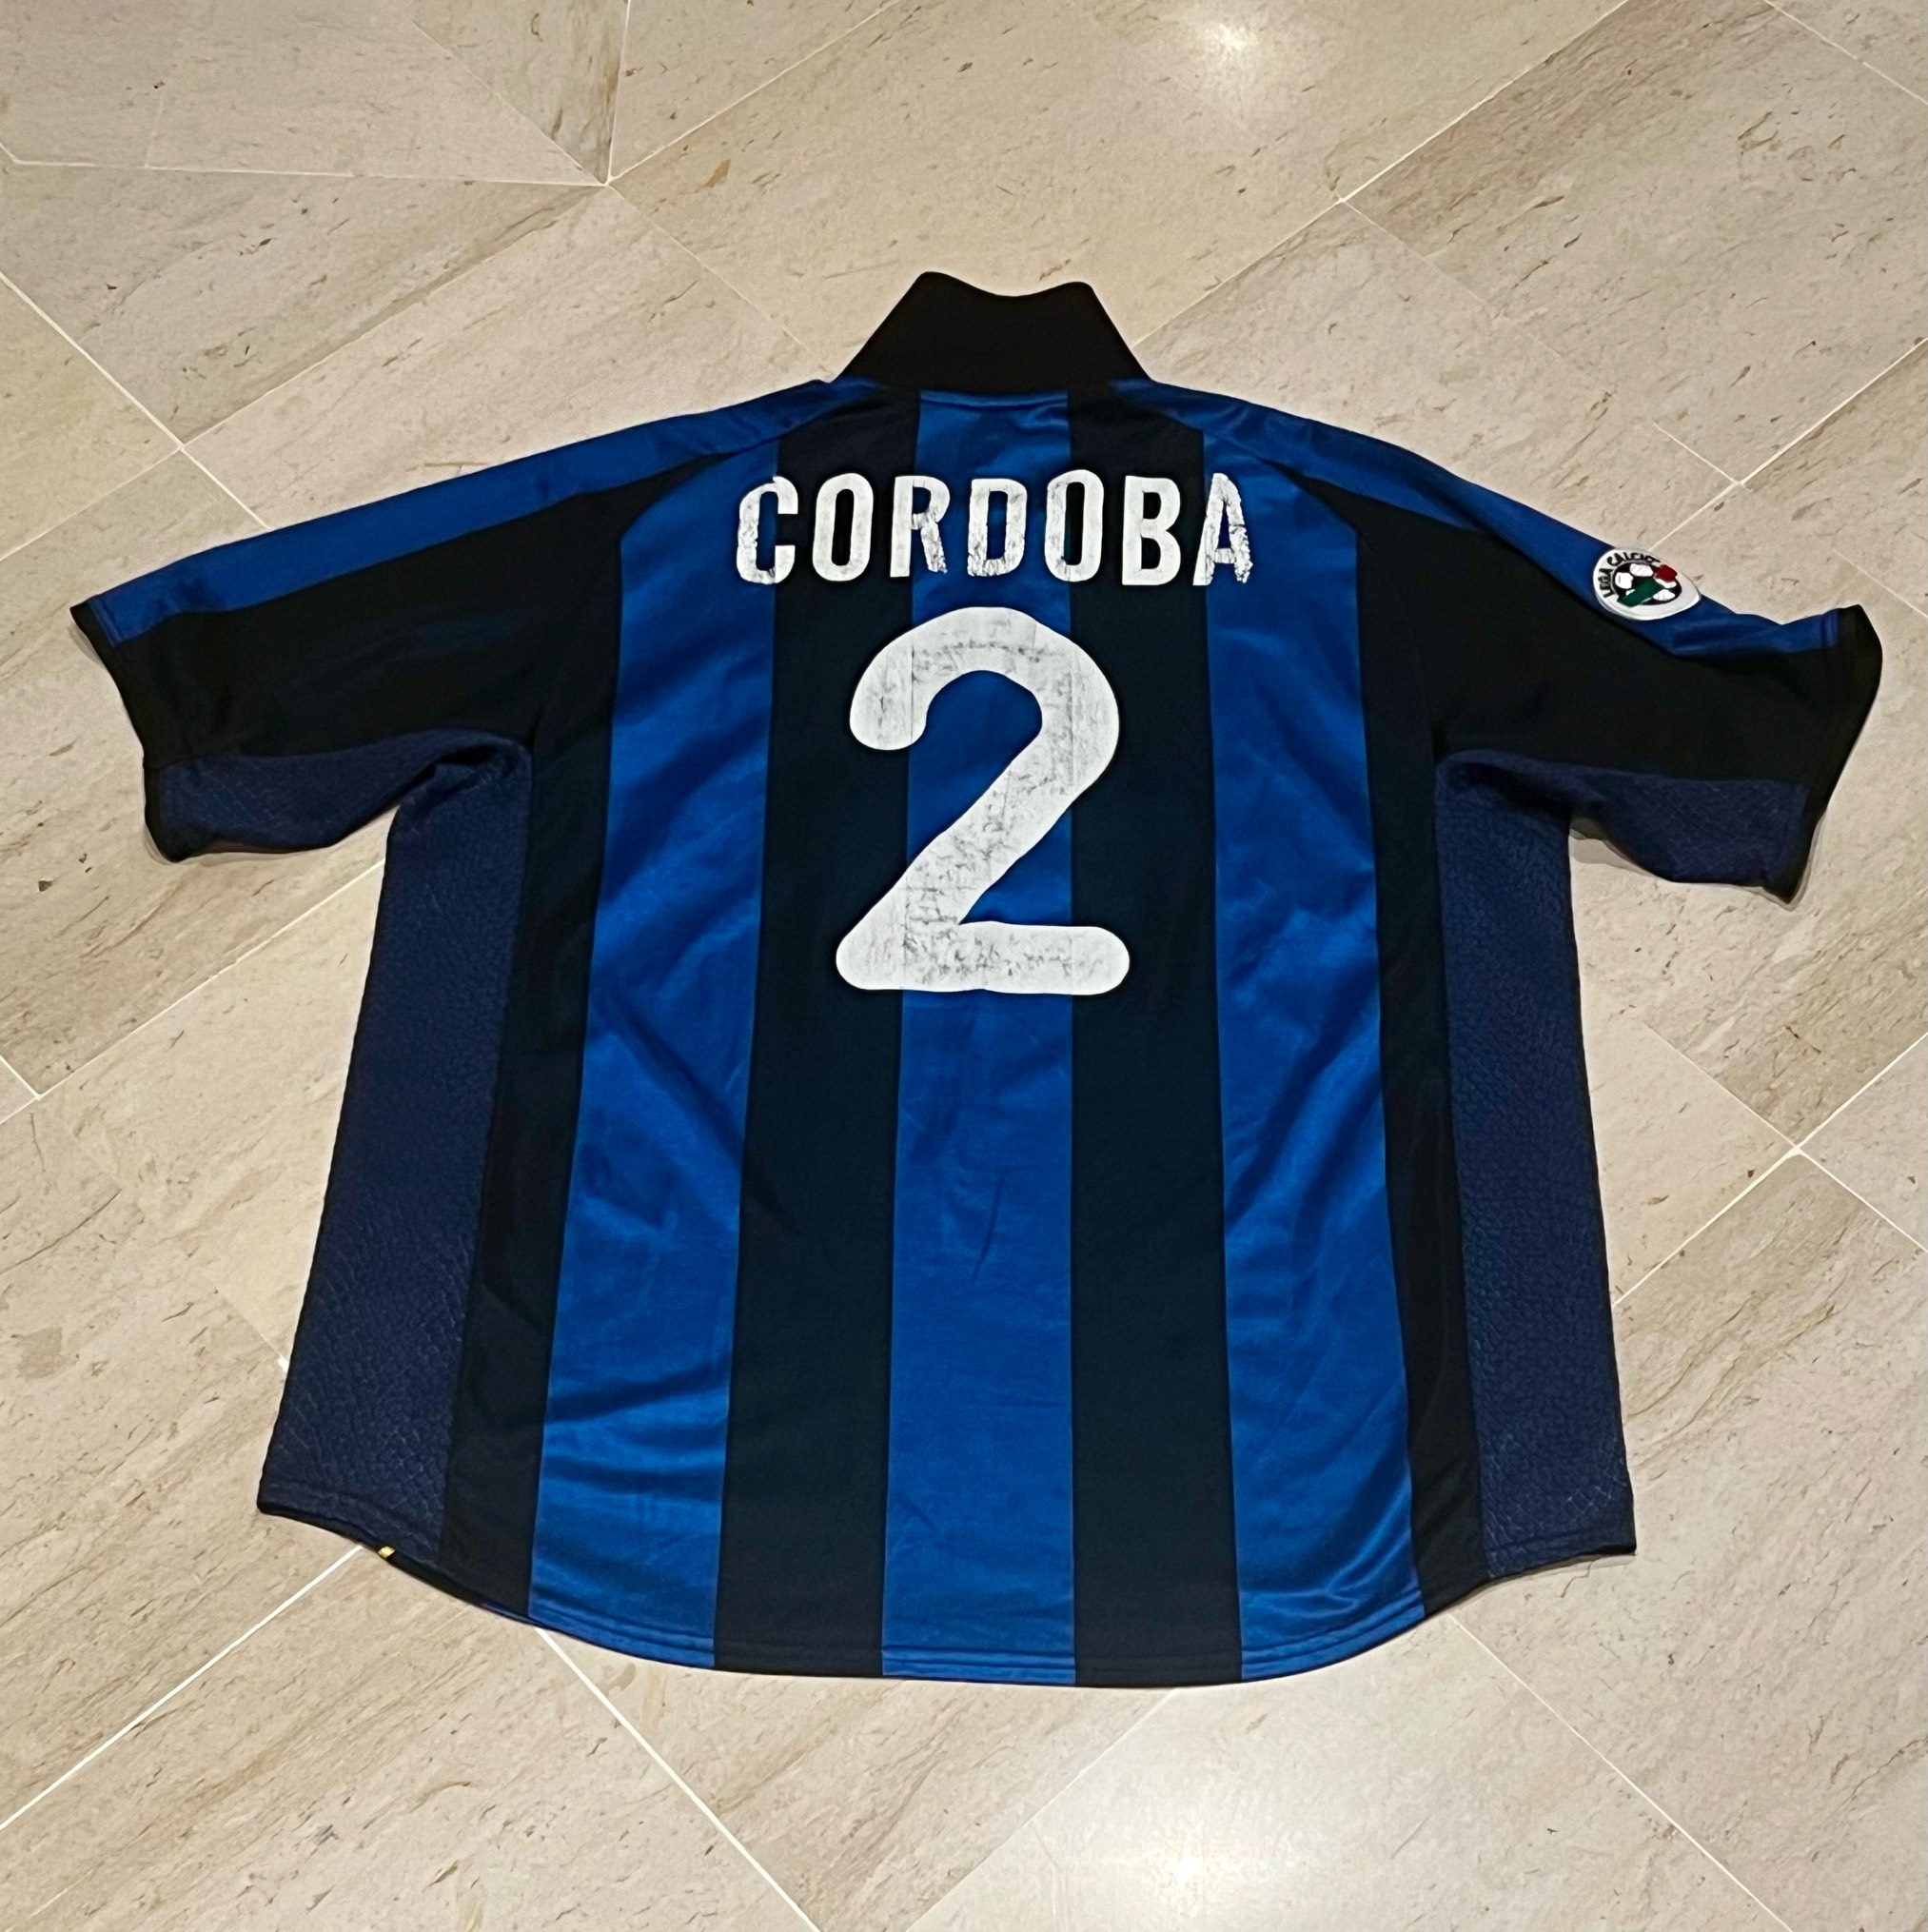 Ivan Cordoba's vintage Colombia jersey